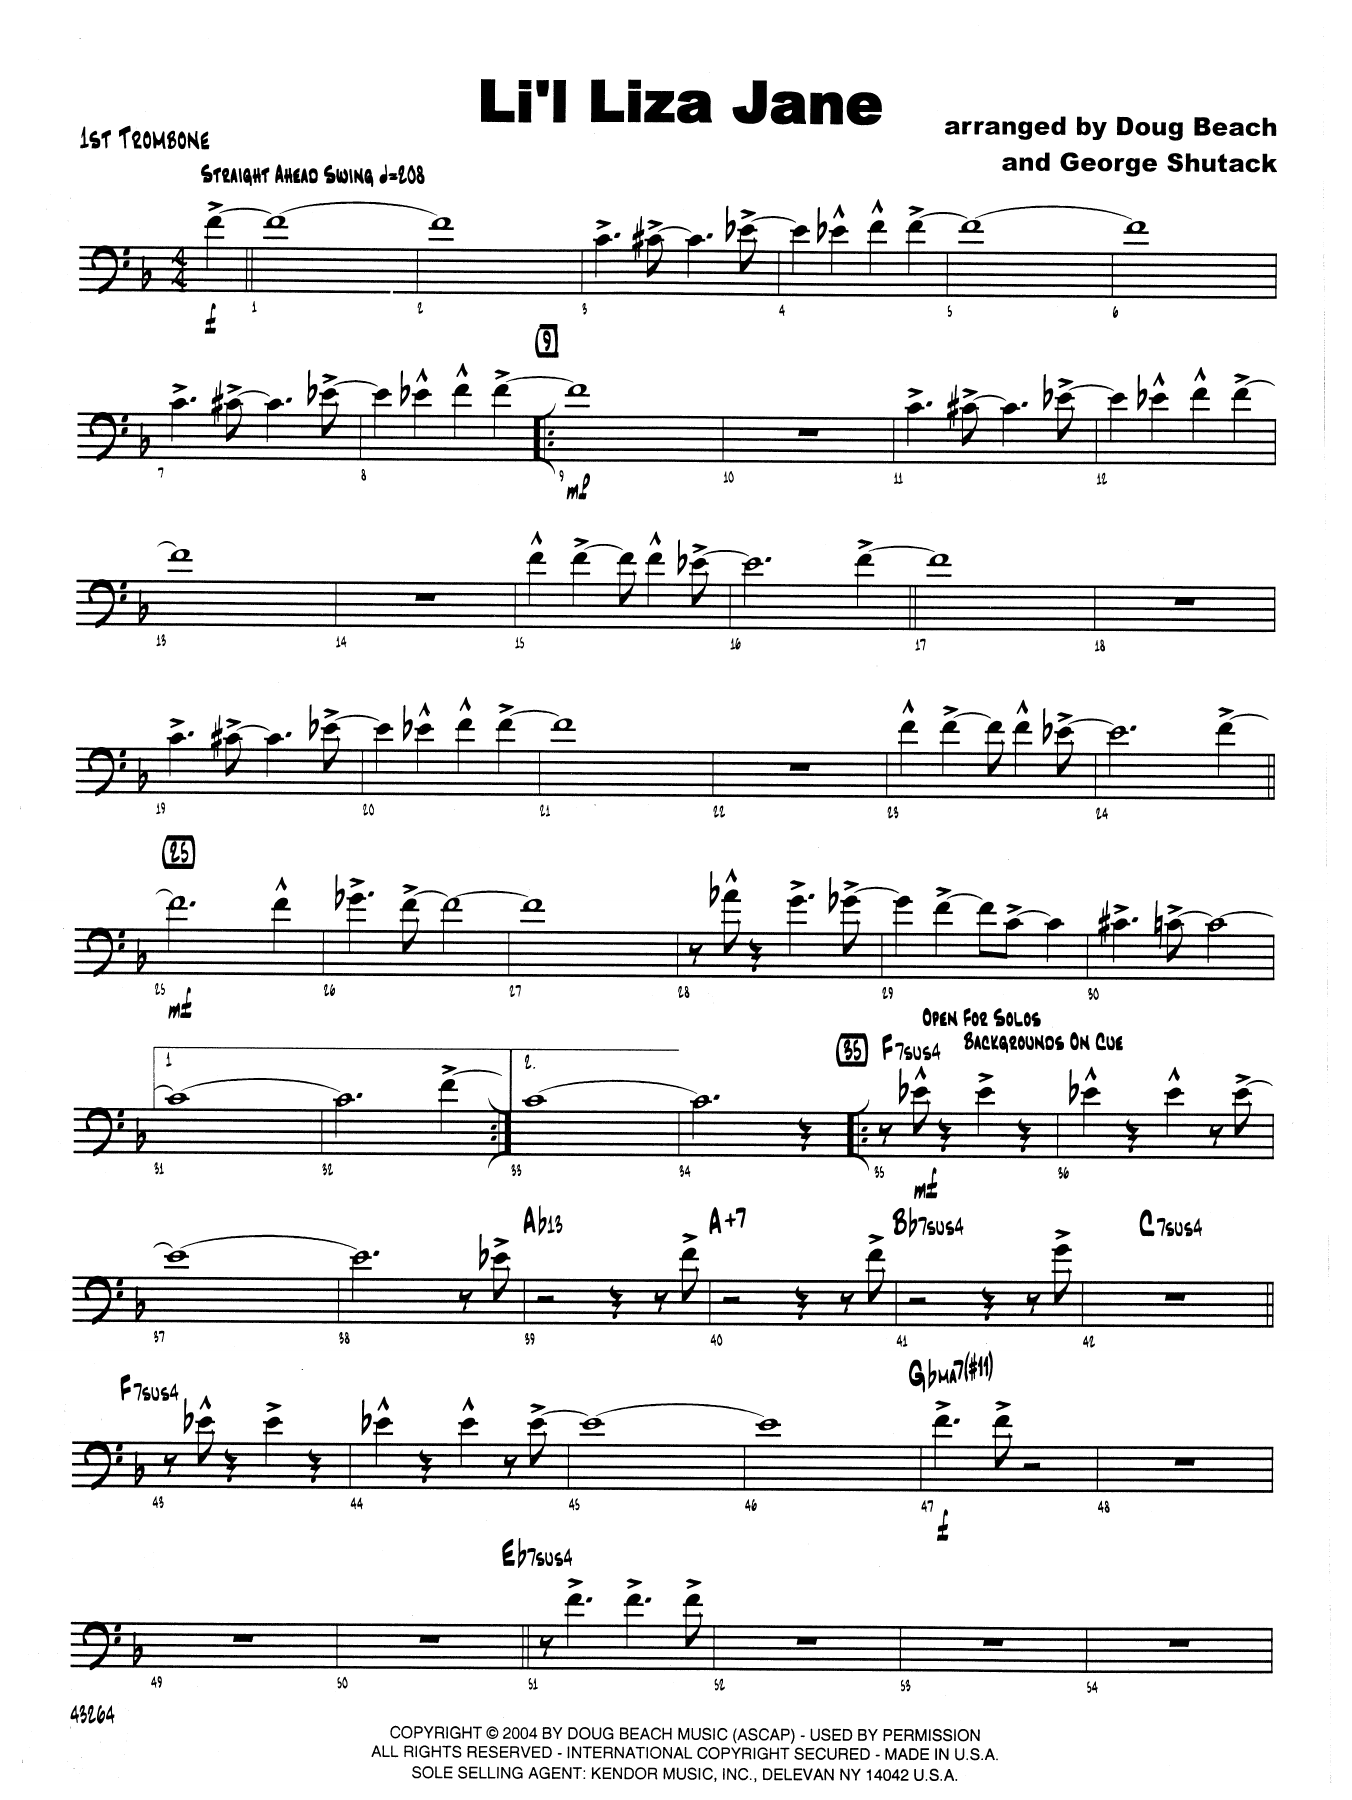 Download Doug Beach & George Shutack Li'l Liza Jane - 1st Trombone Sheet Music